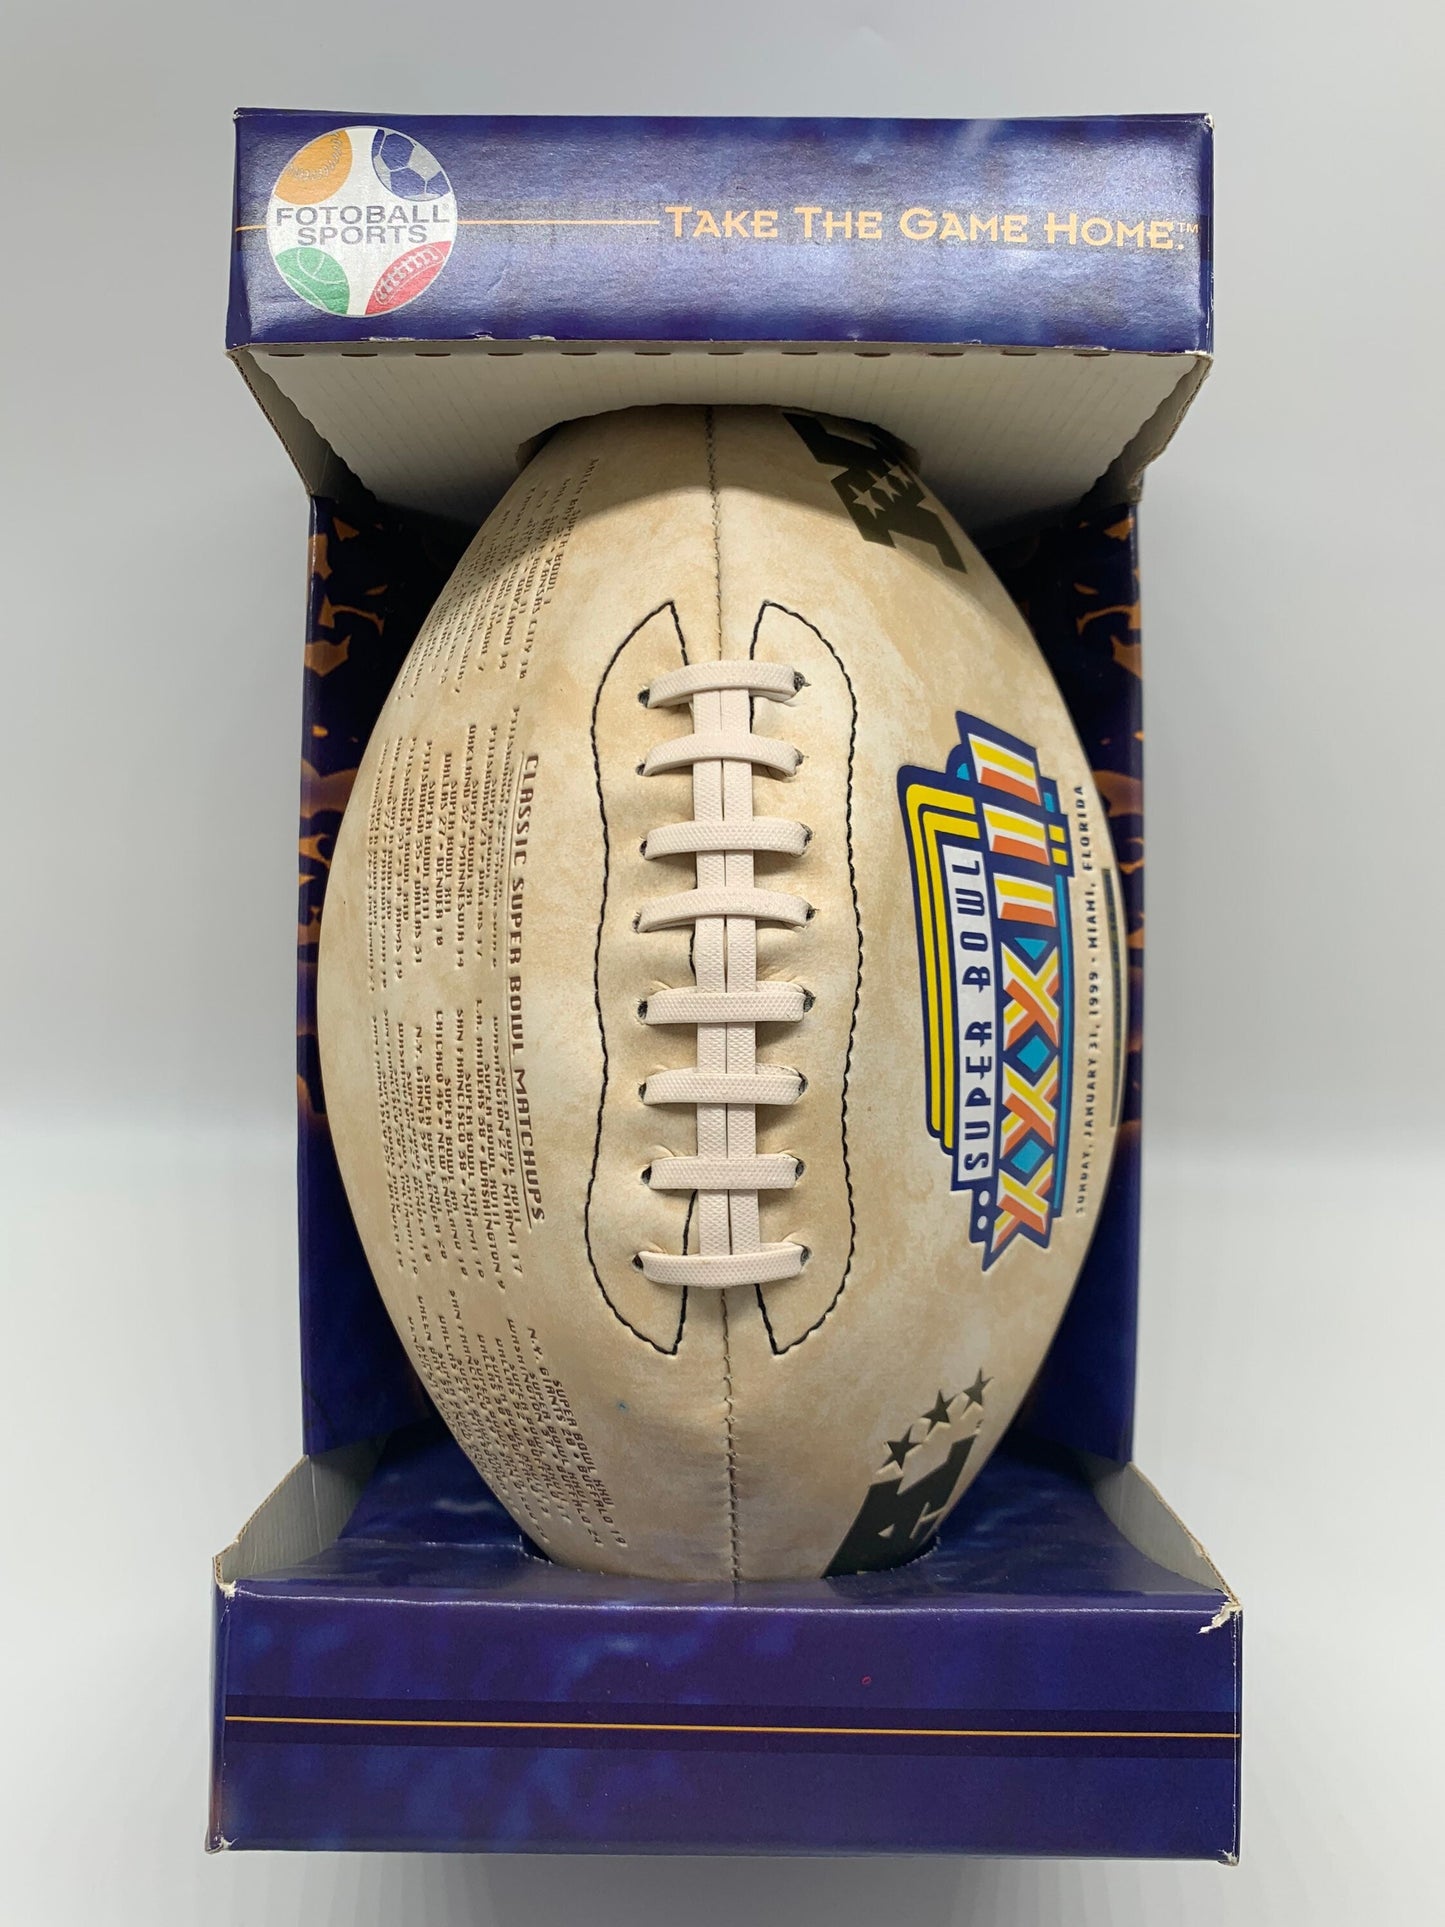 Fotoball Sports Full Size Football Tan Brown Super Bowl 33 Miami Florida Collectible NFL Memorabilia Ball Perfect Birthday Gift